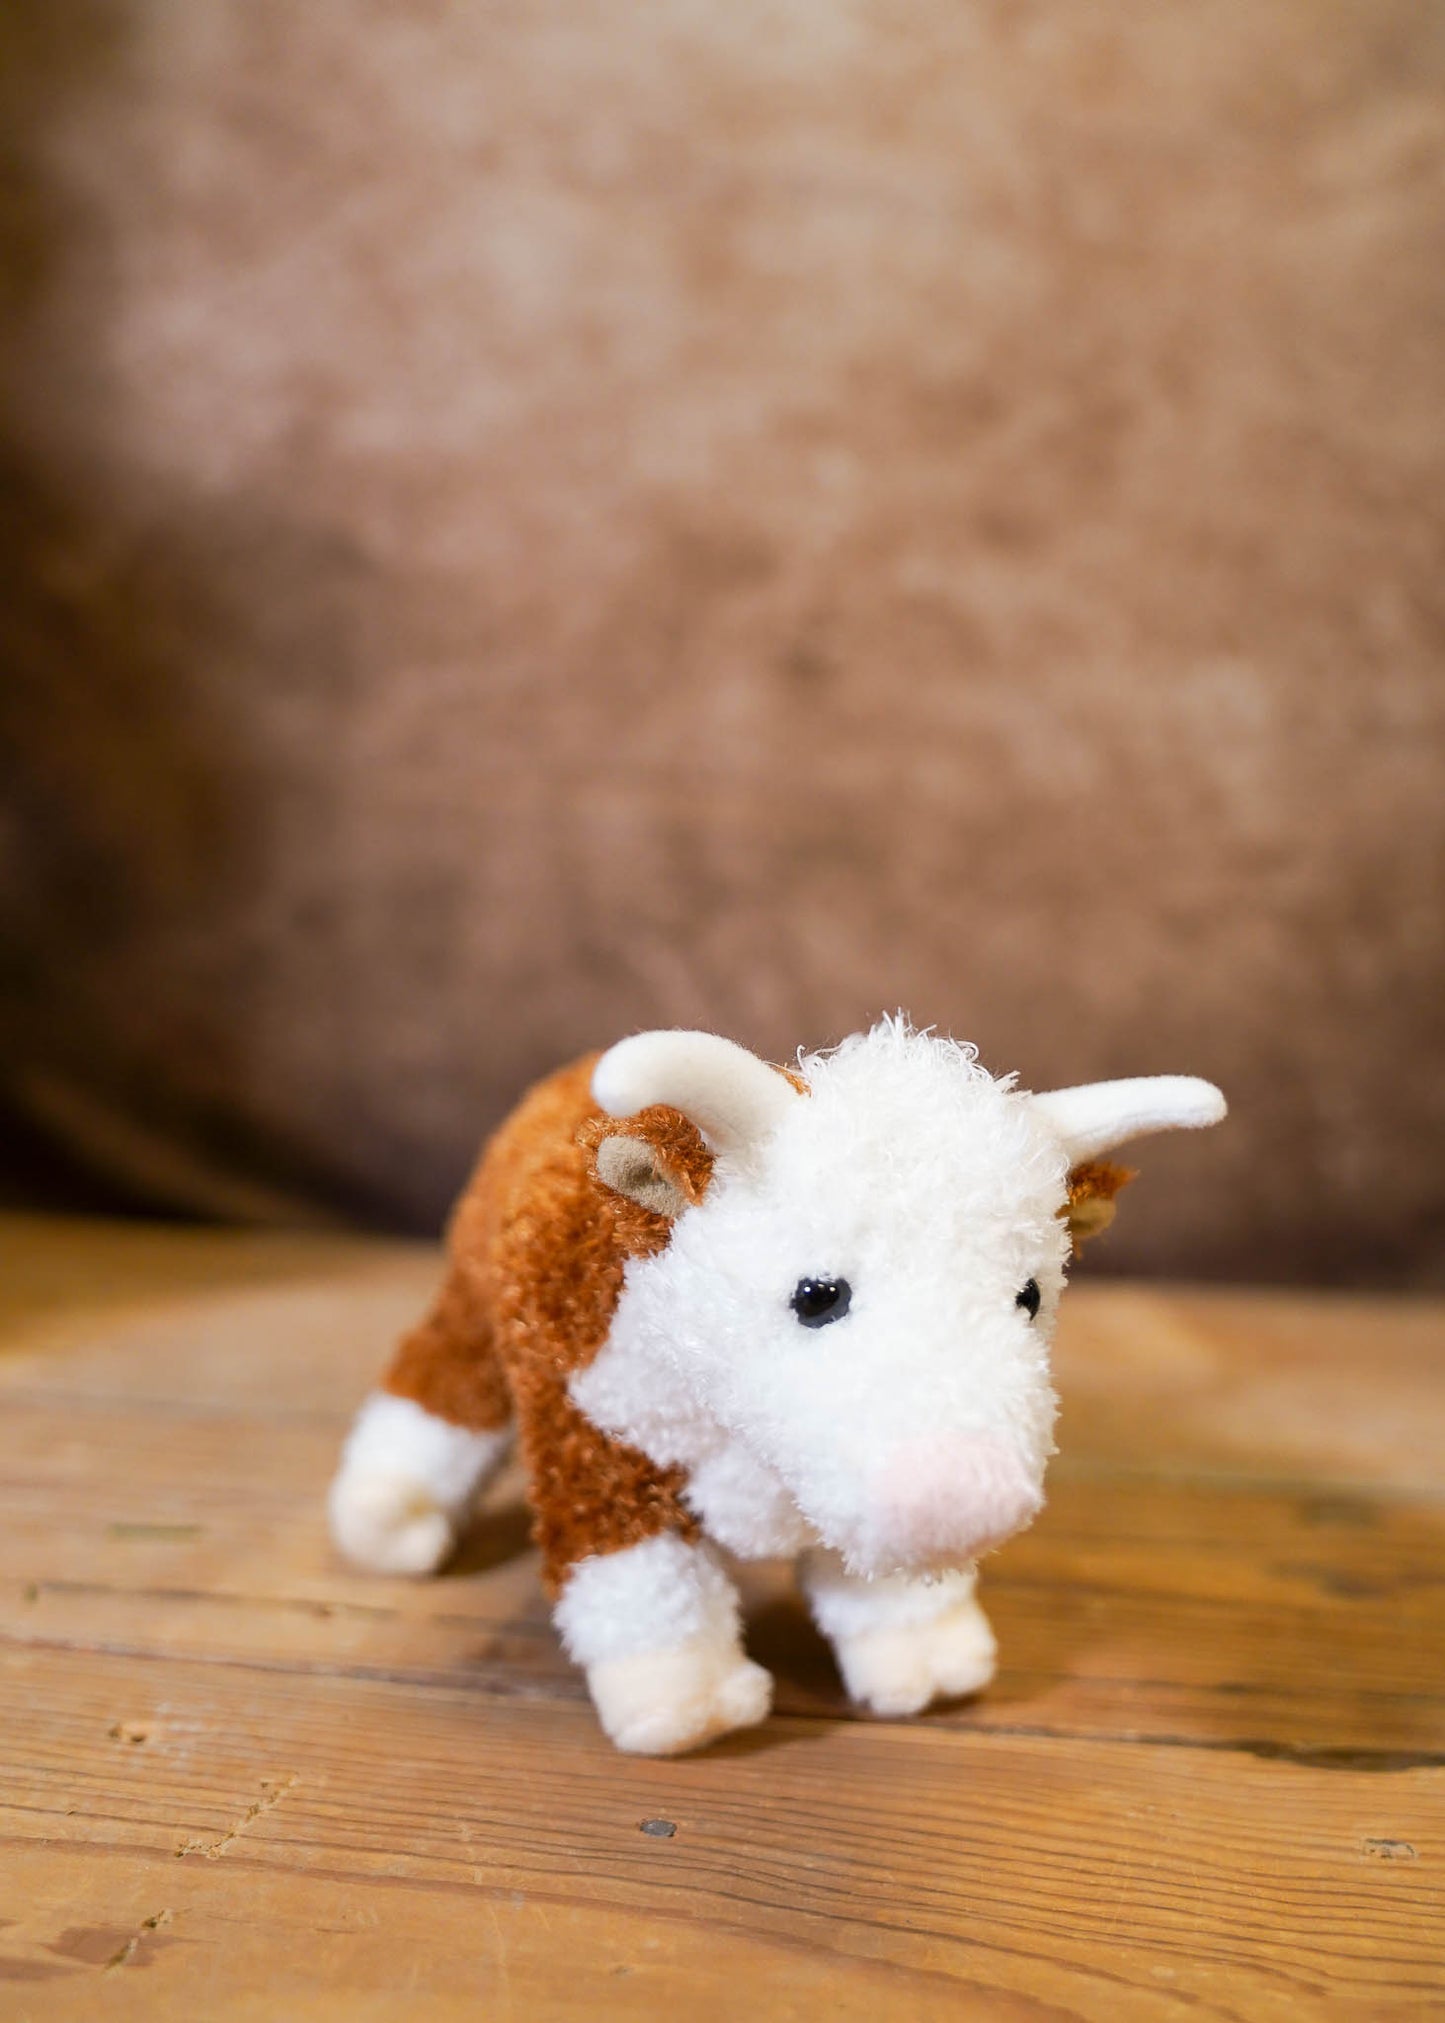 Hereford Bull Stuffed Animal